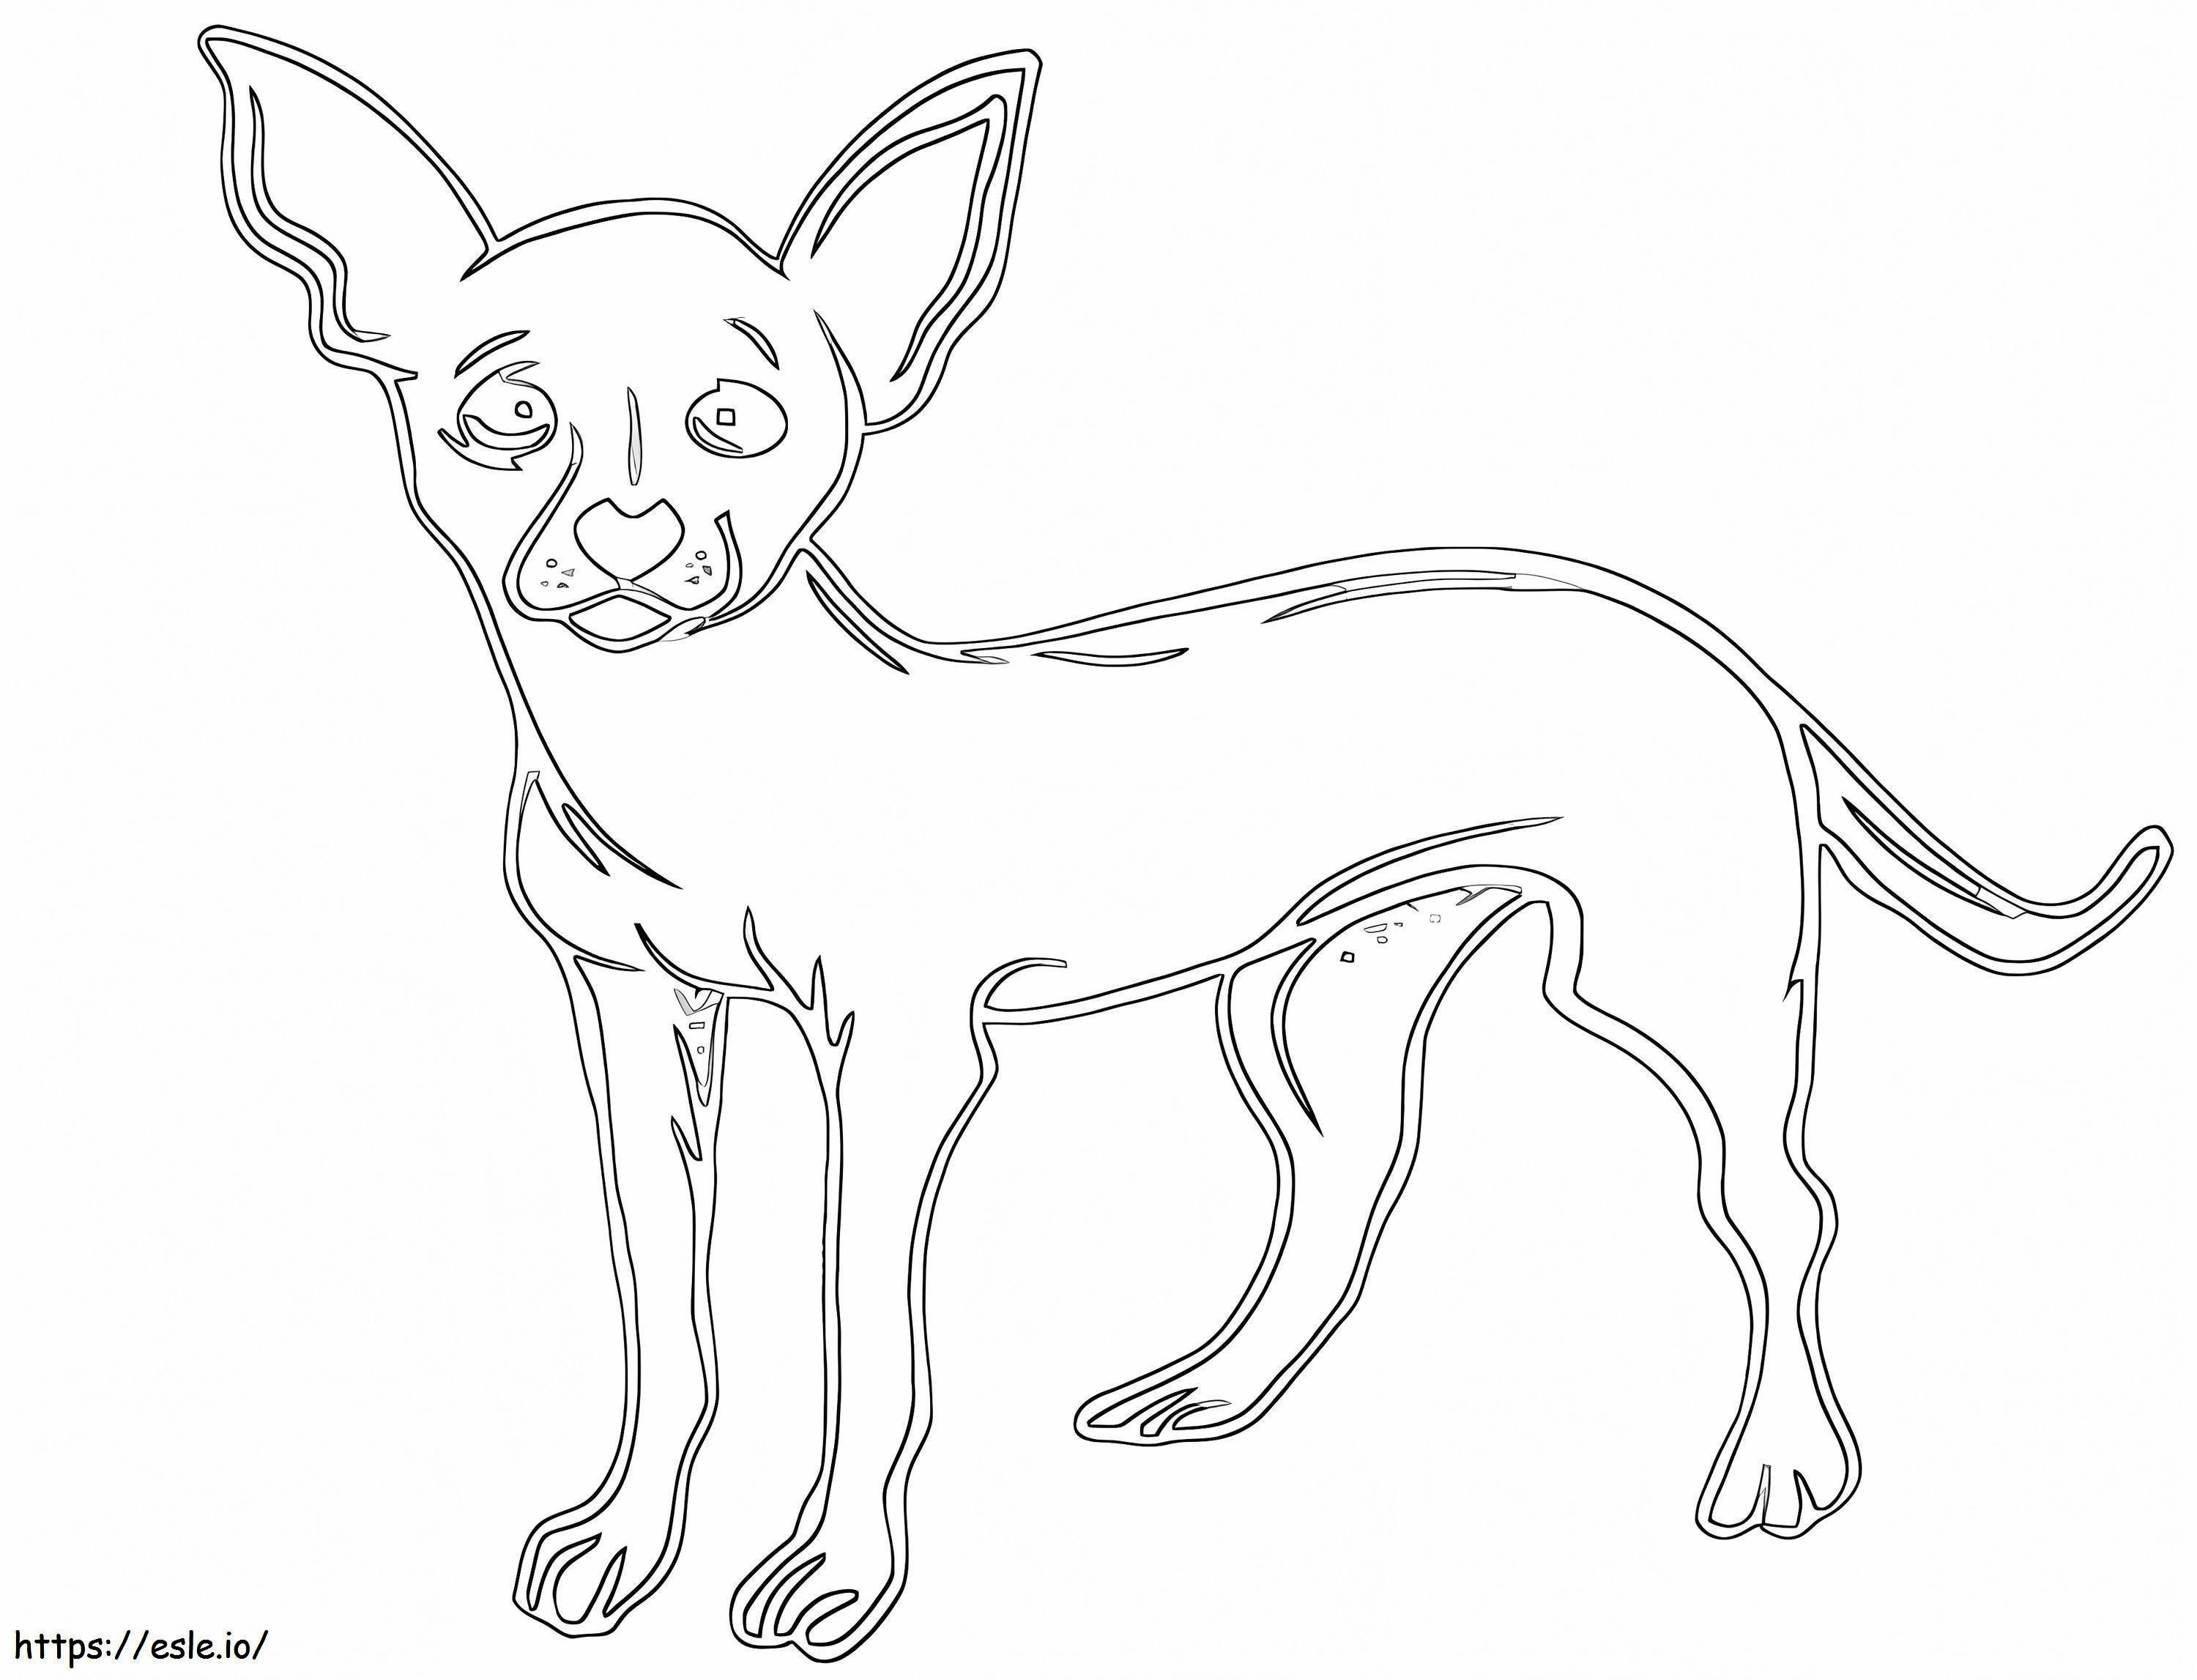 Printable Chihuahua coloring page